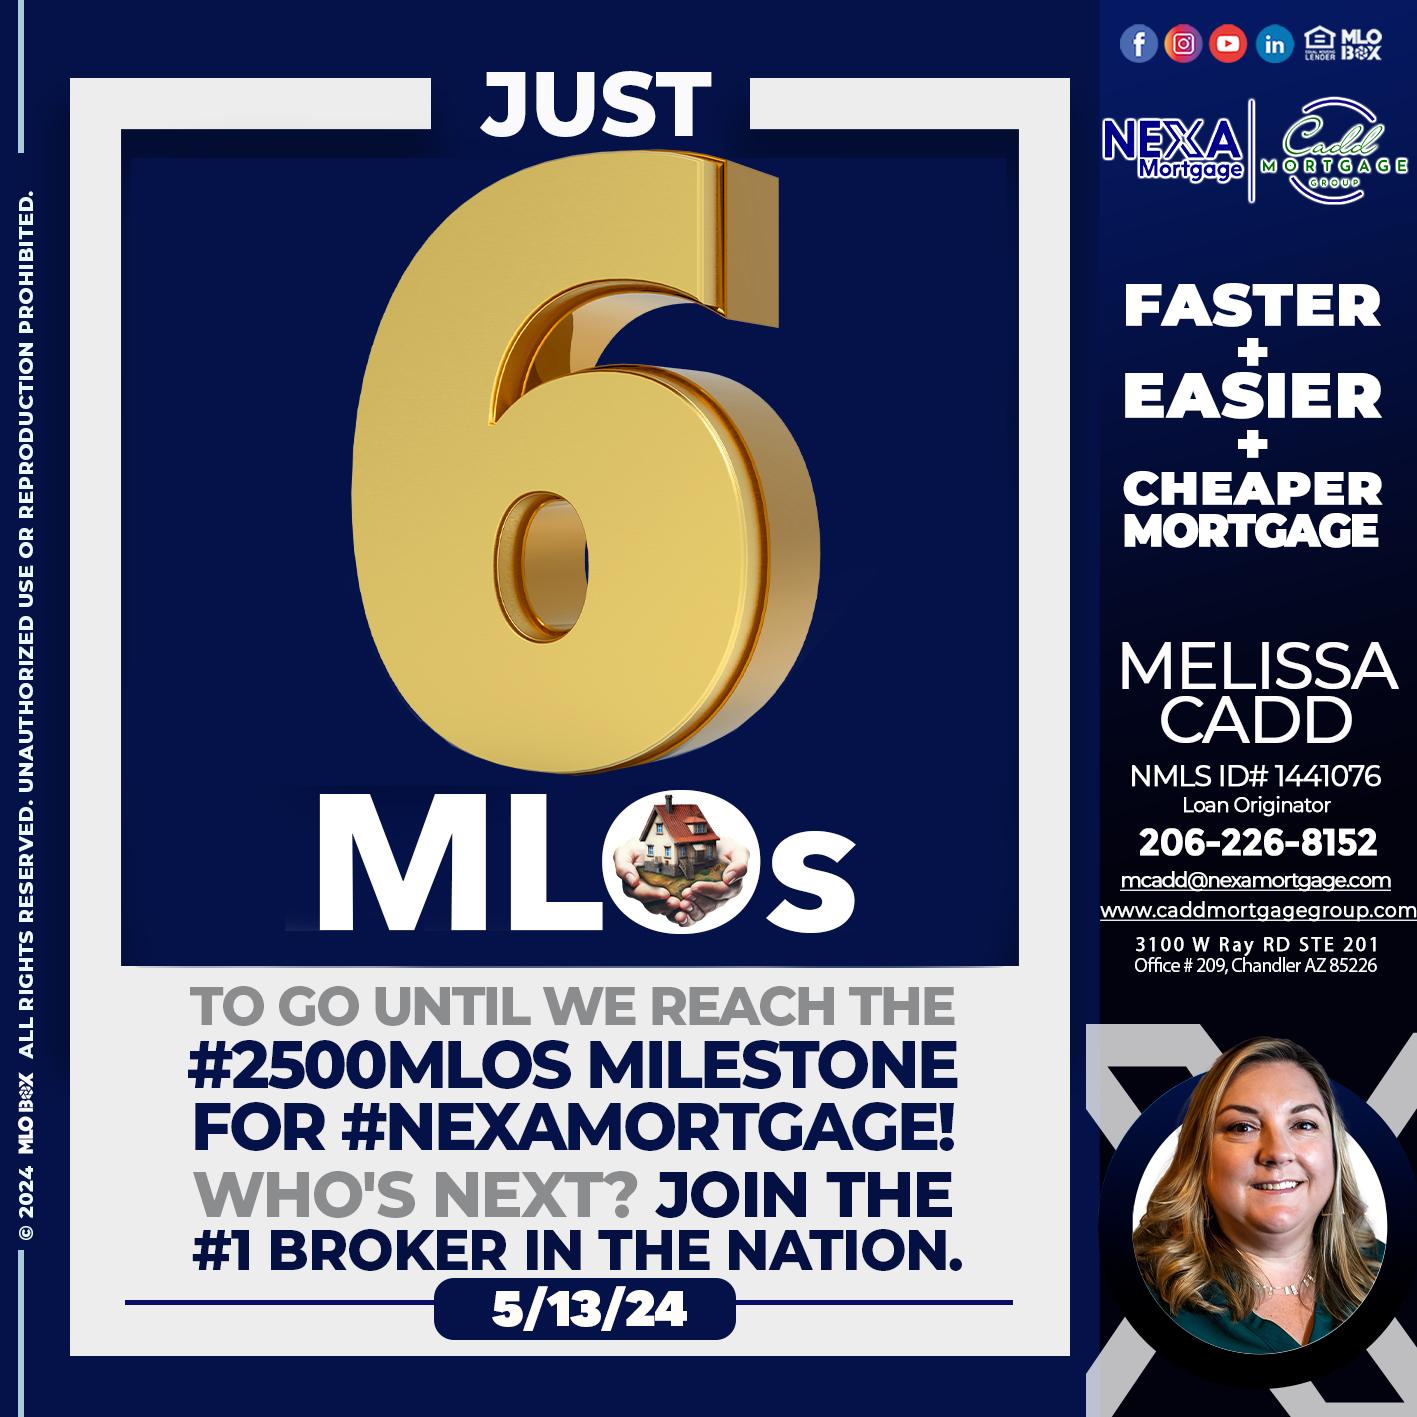 JUST 6 - Melissa Cadd -Loan Originator